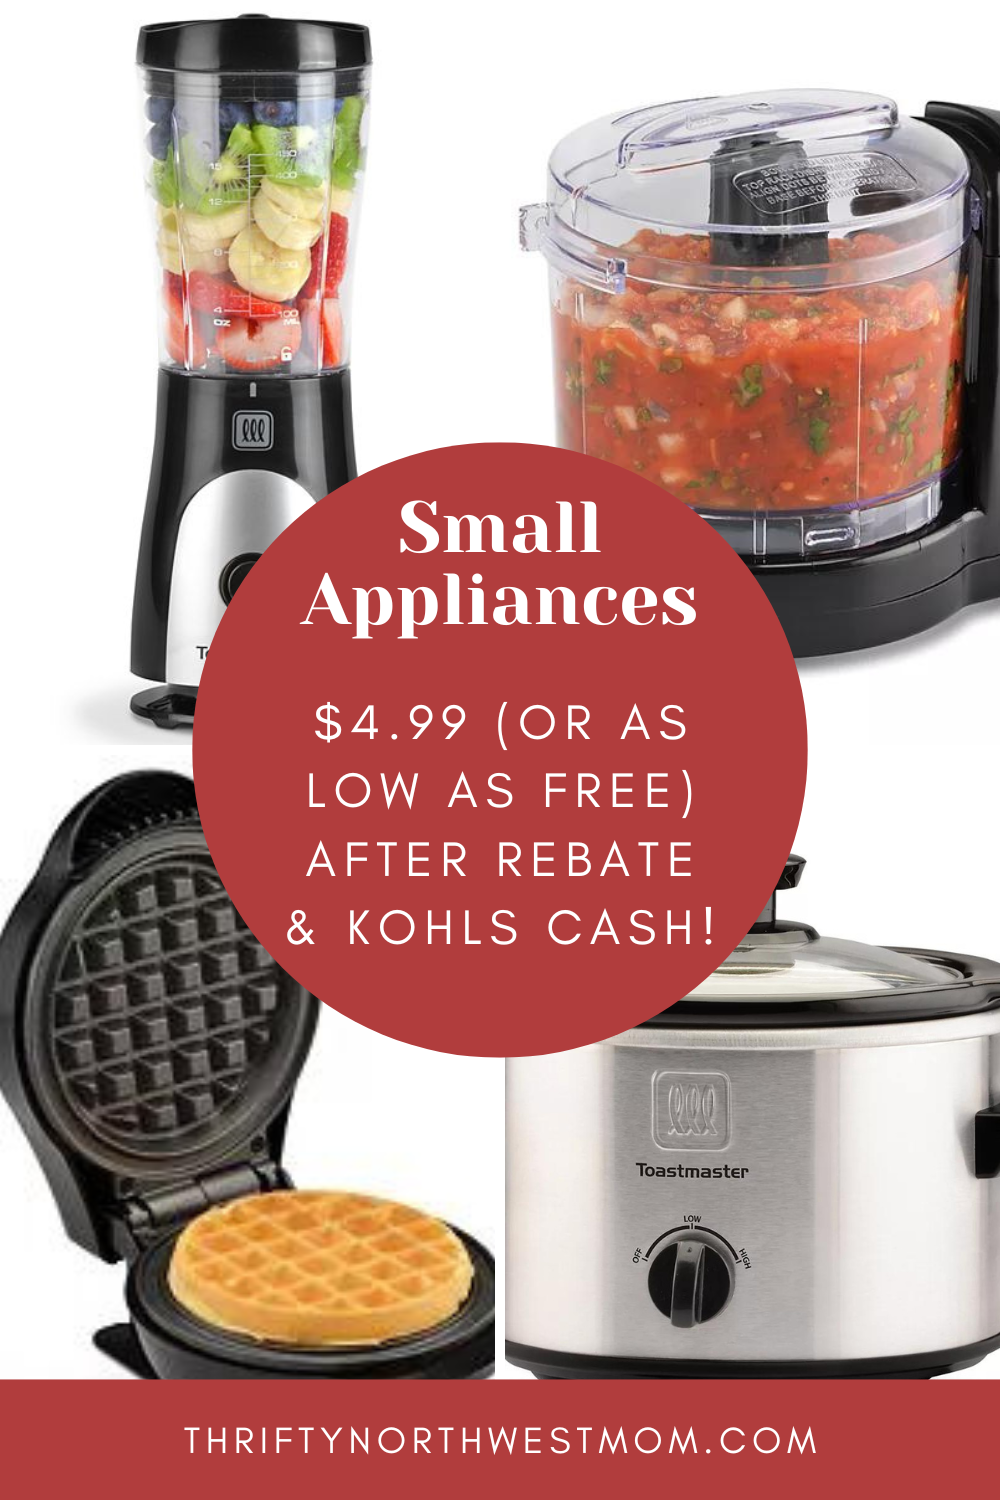 kohls-small-appliance-sale-3-appliances-for-free-after-rebate-kohls